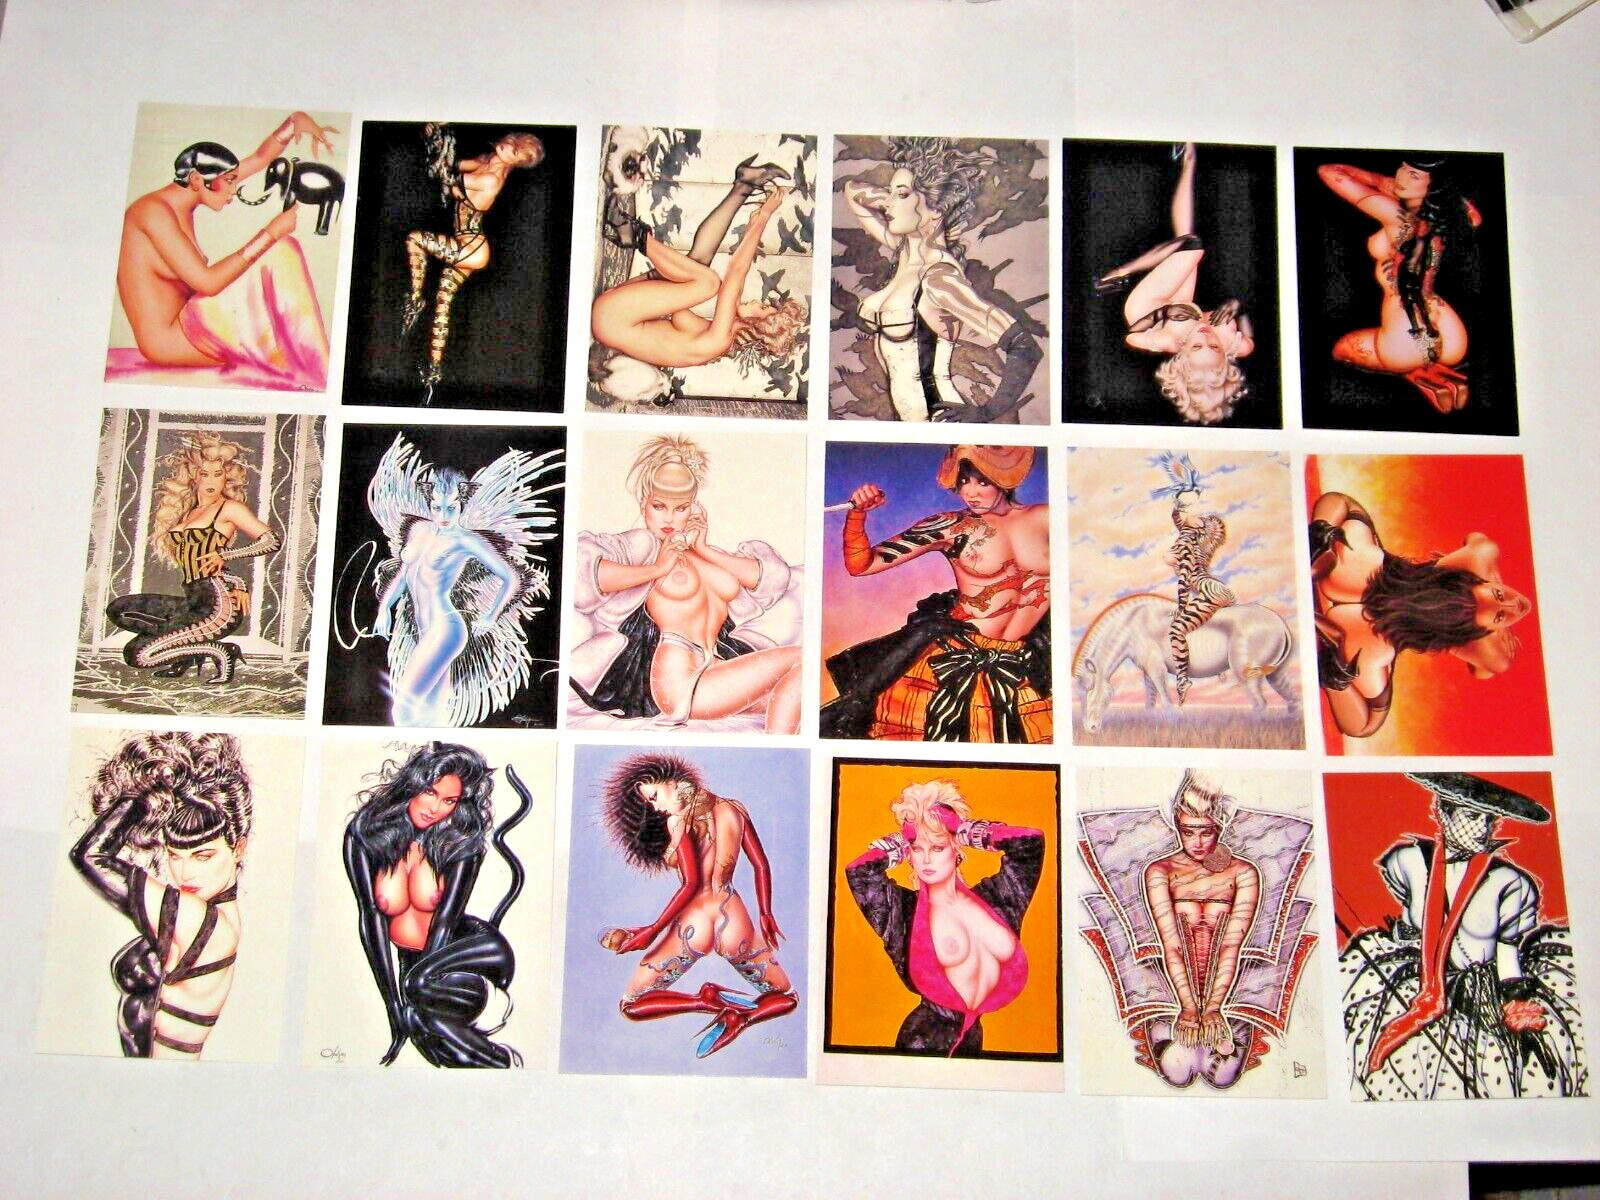 1992 OLIVIA SERIES 1 PIN UP COMIC IMAGES COMPLETE BASE 90 CARD SET DE BERARDINIS